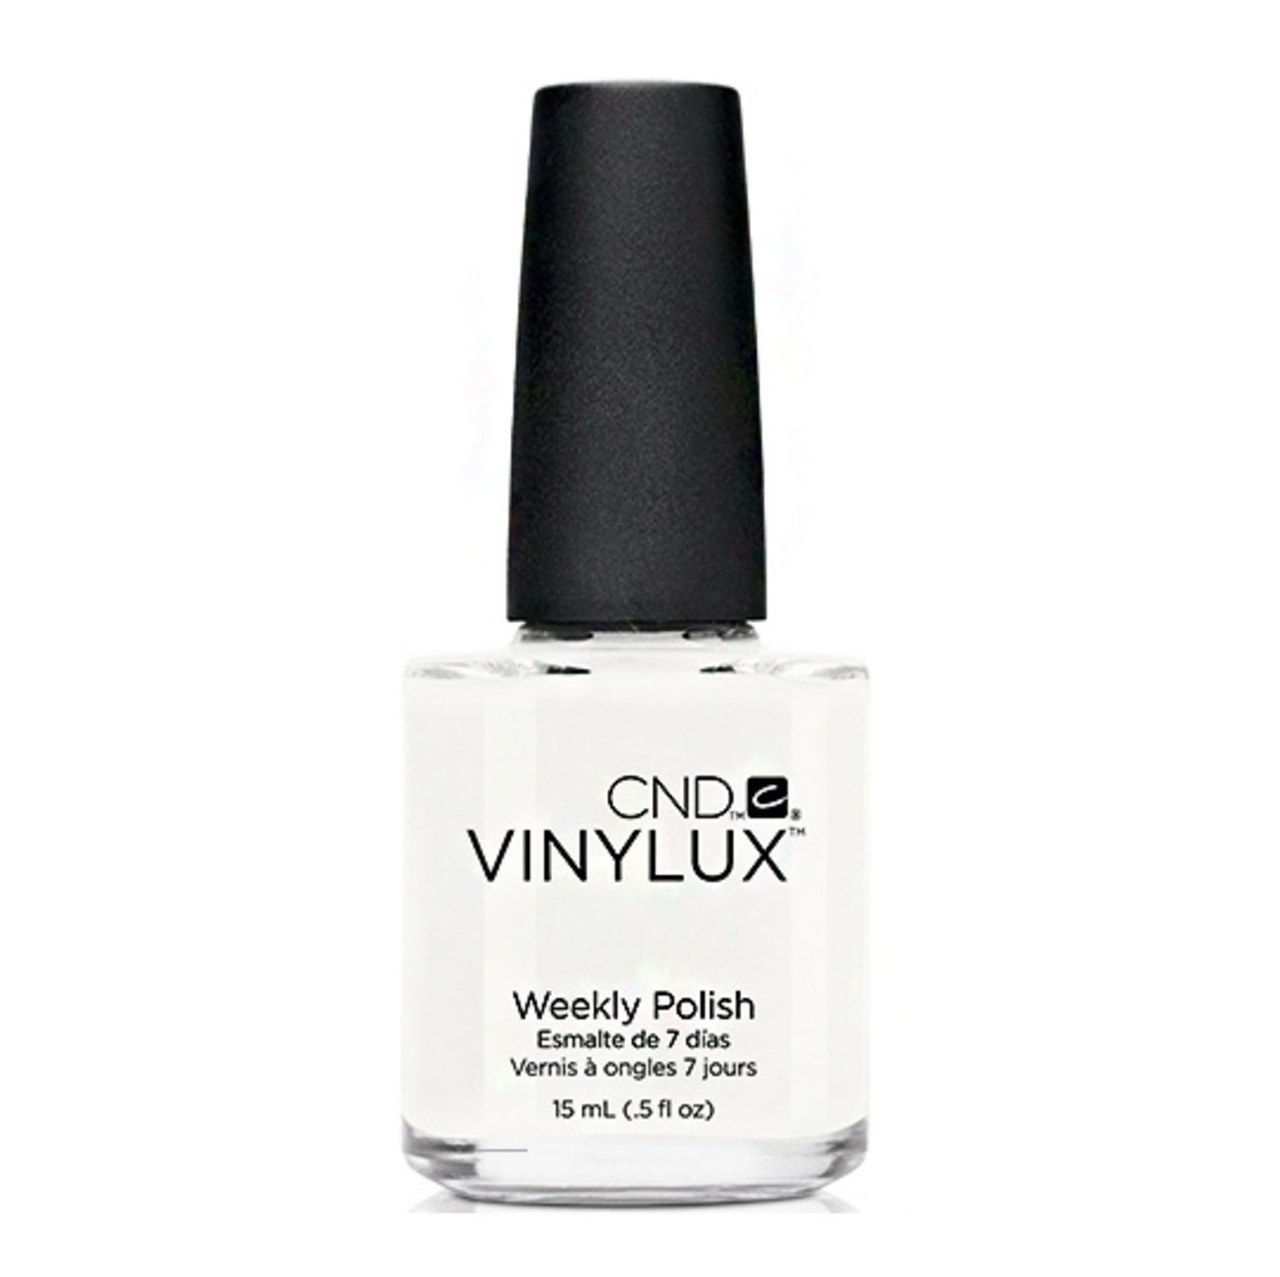 CND vinylux cream puff nail polish